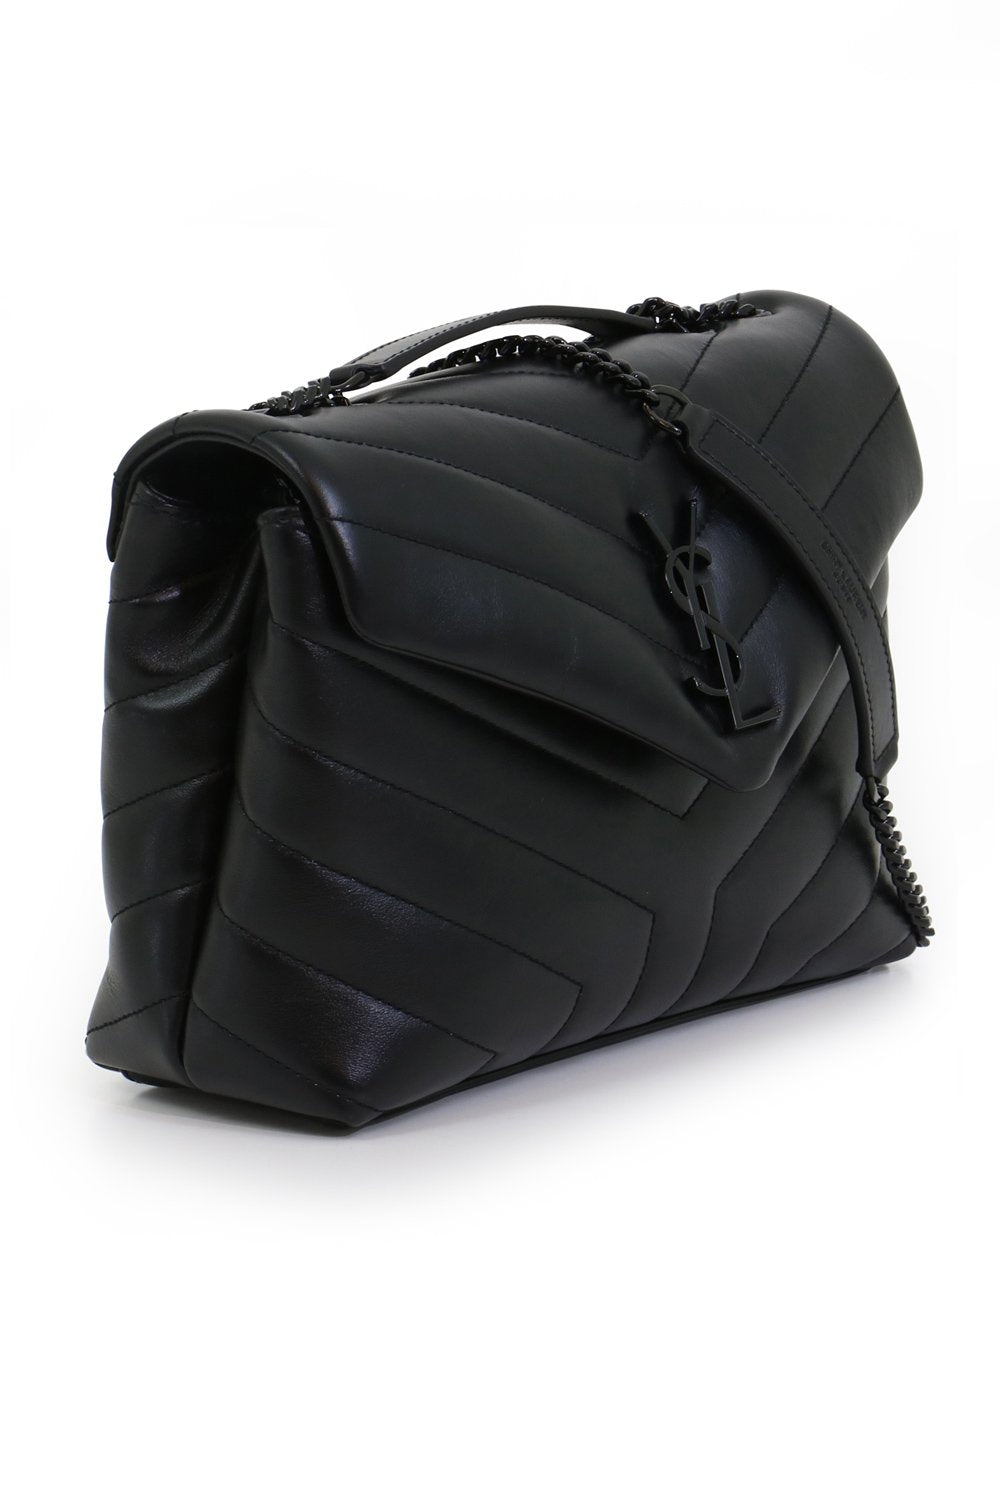 SAINT LAURENT BAGS BLACK LOULOU SMALL FLAP BAG BLACK/BLACK